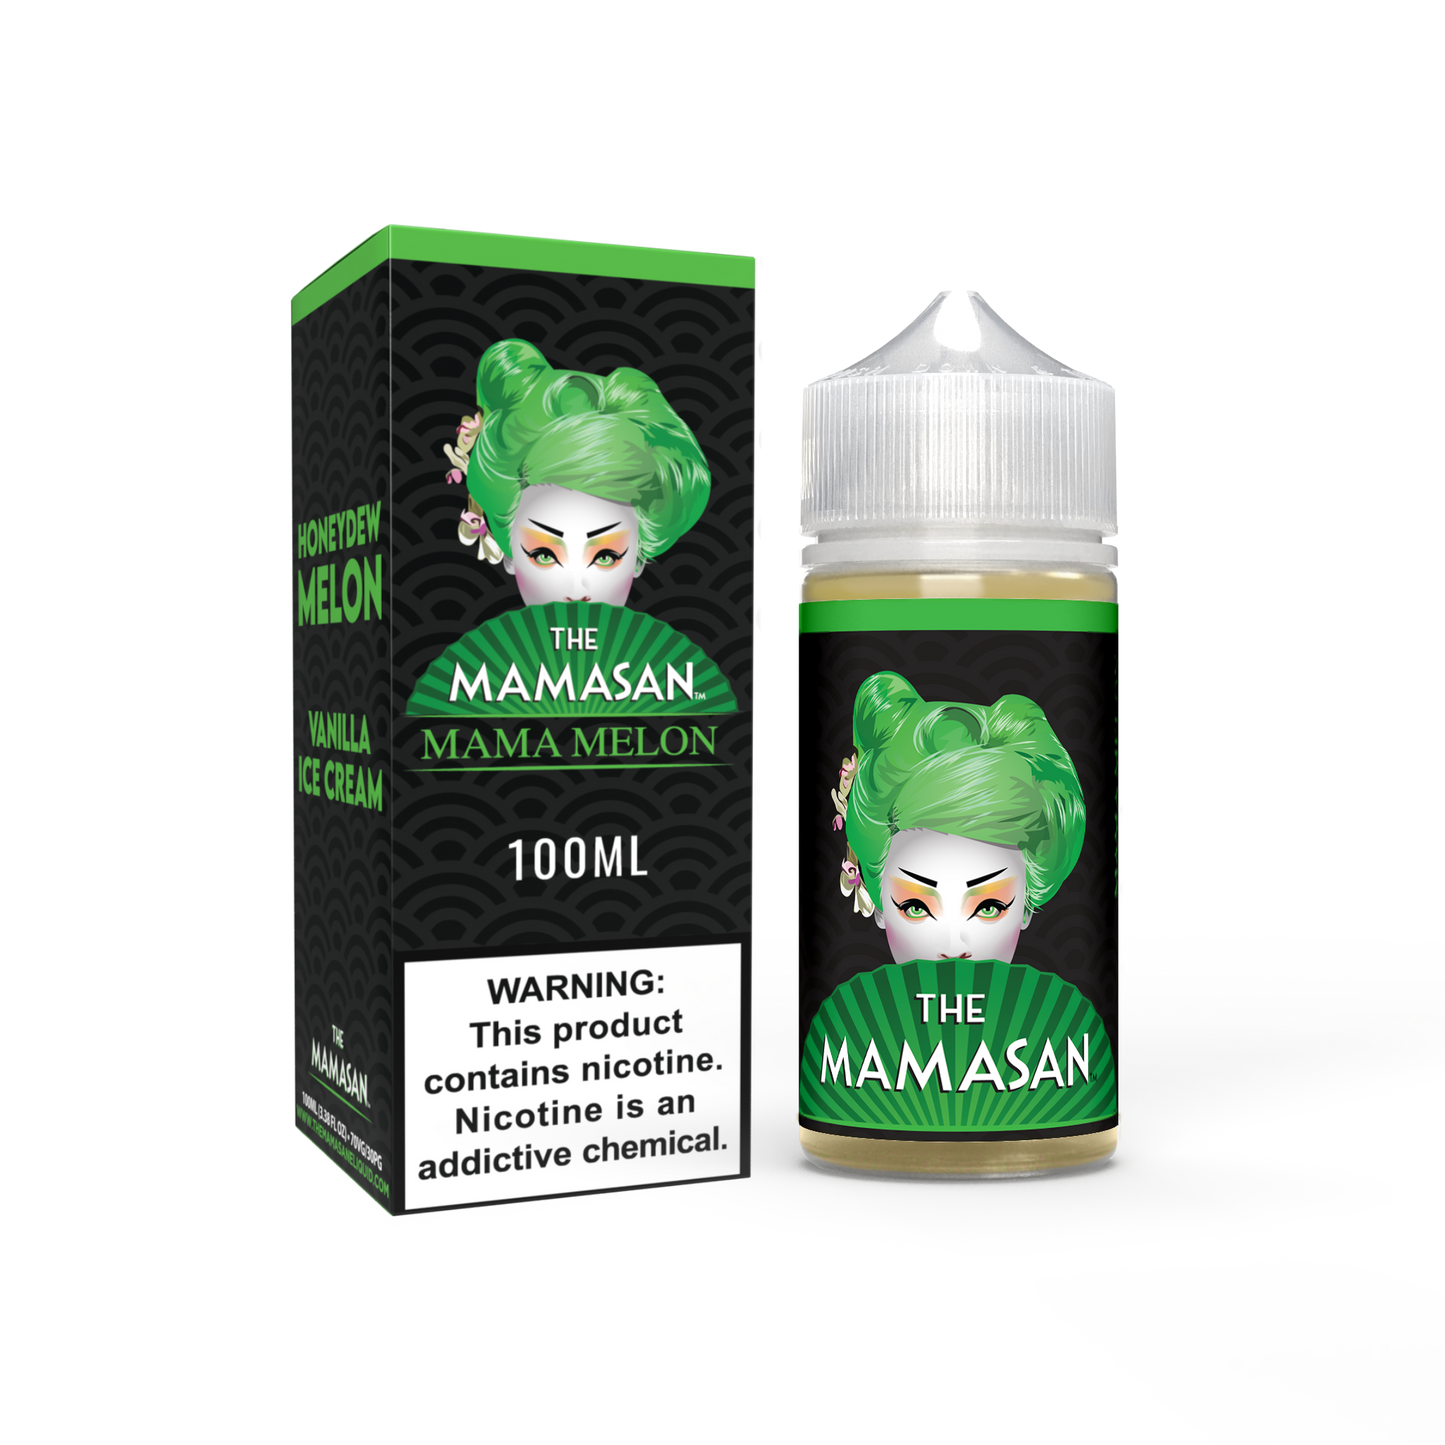 Mamasan mama melon 100ml vape juice with box packaging